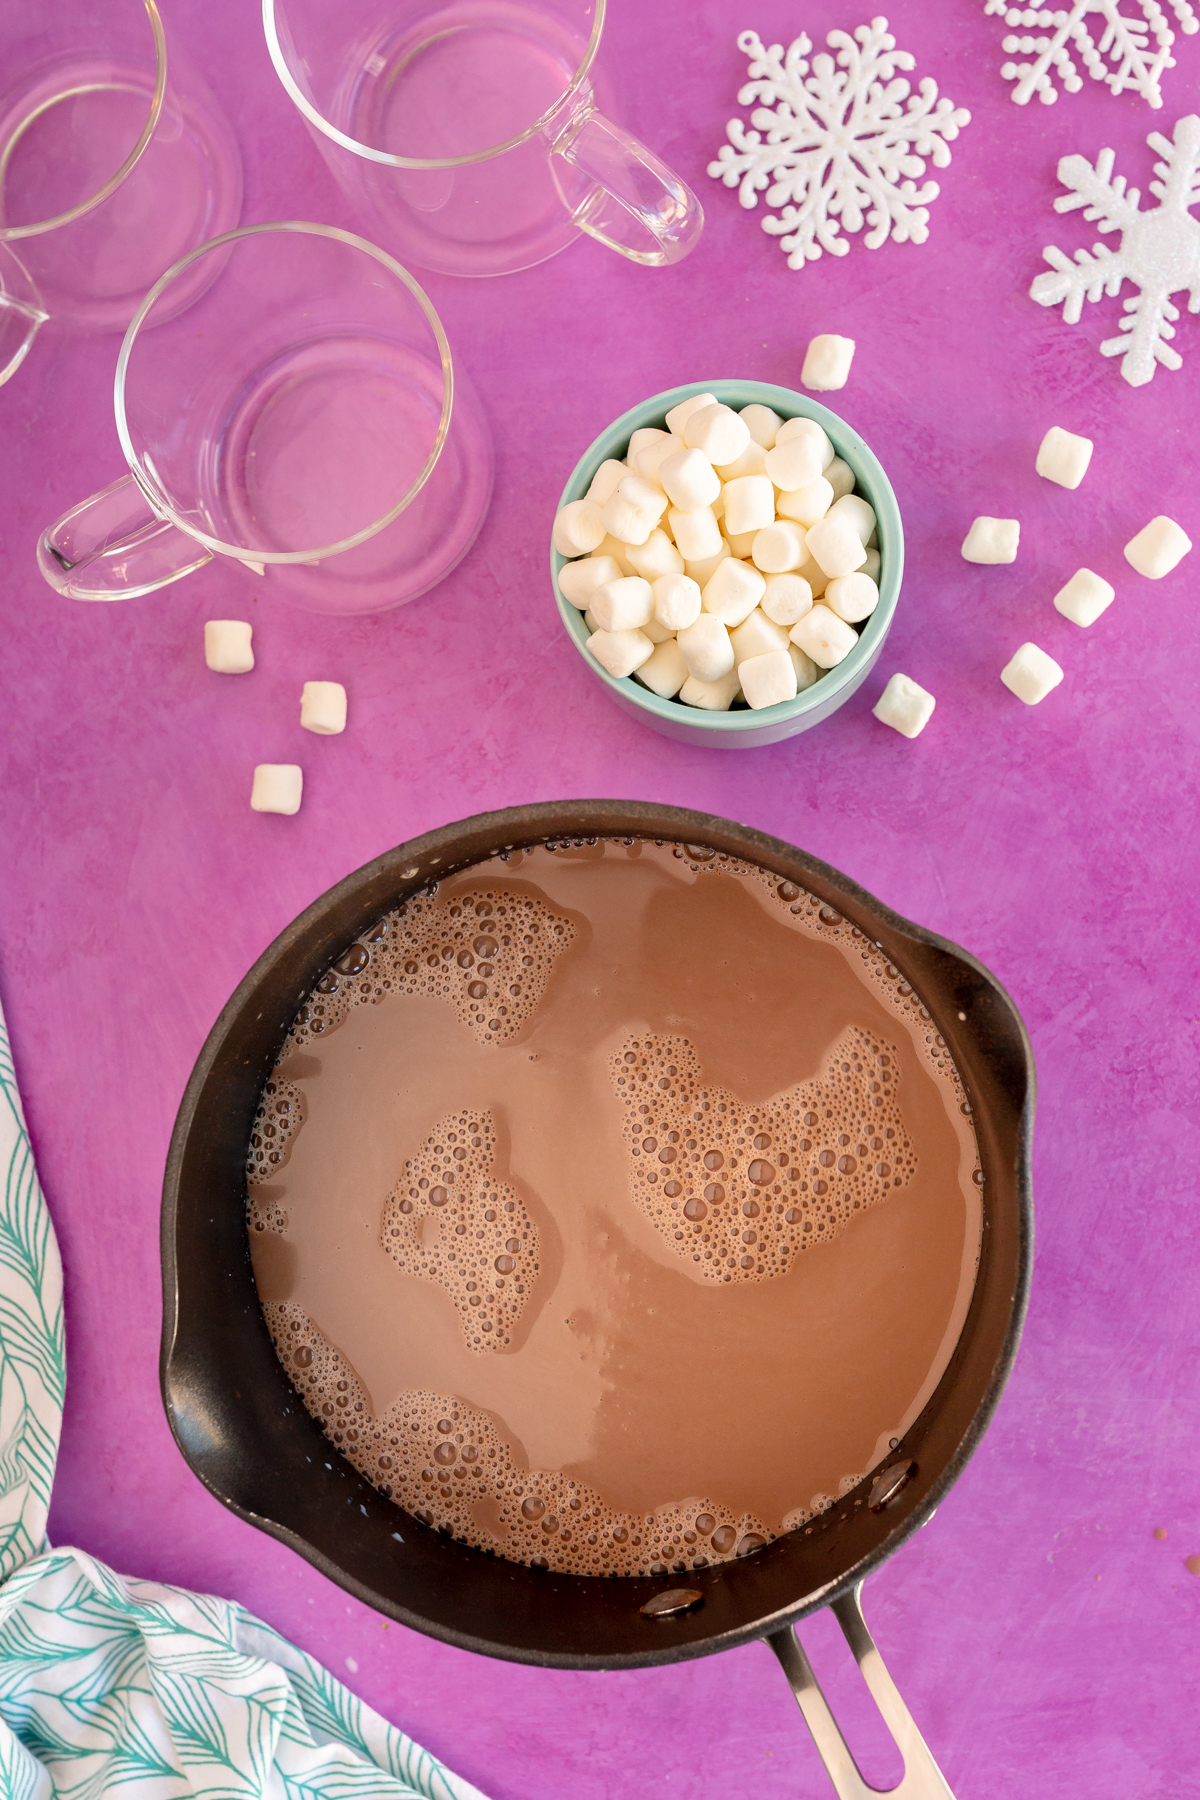 pan with homemade hot chocolate